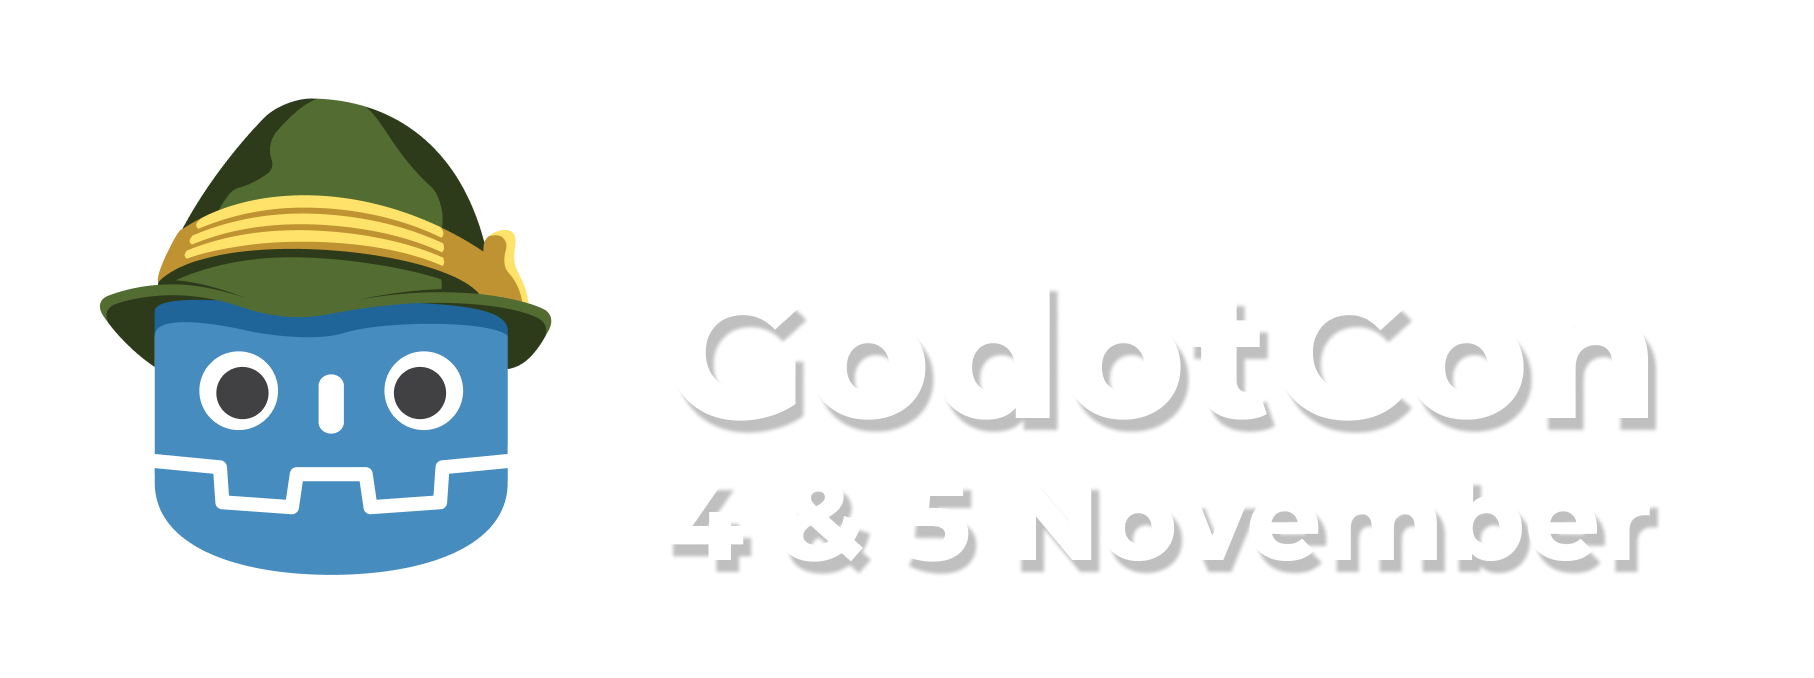 GodotCon 4 & 5 November